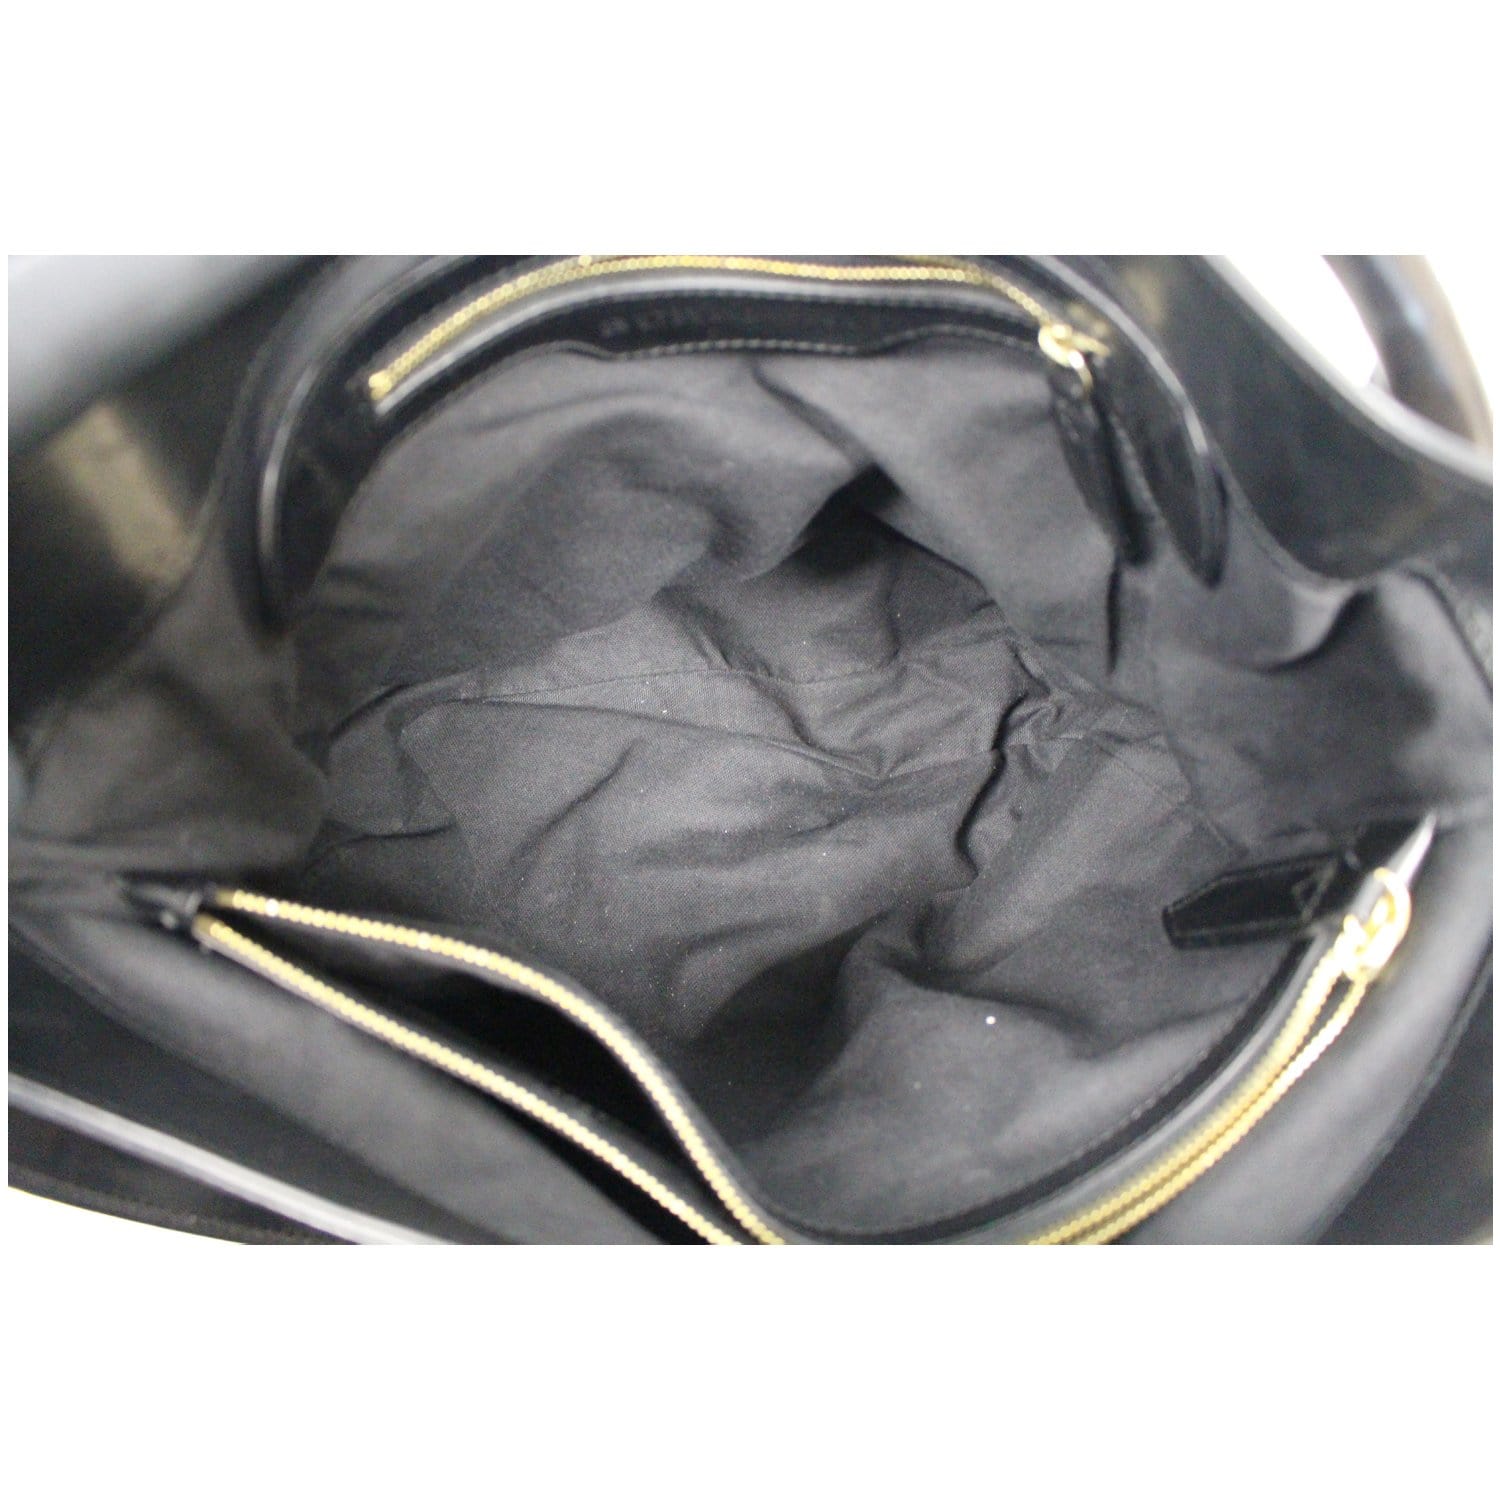 Burberry Bridle House Check Bag - Black Shoulder Bags, Handbags - BUR86859